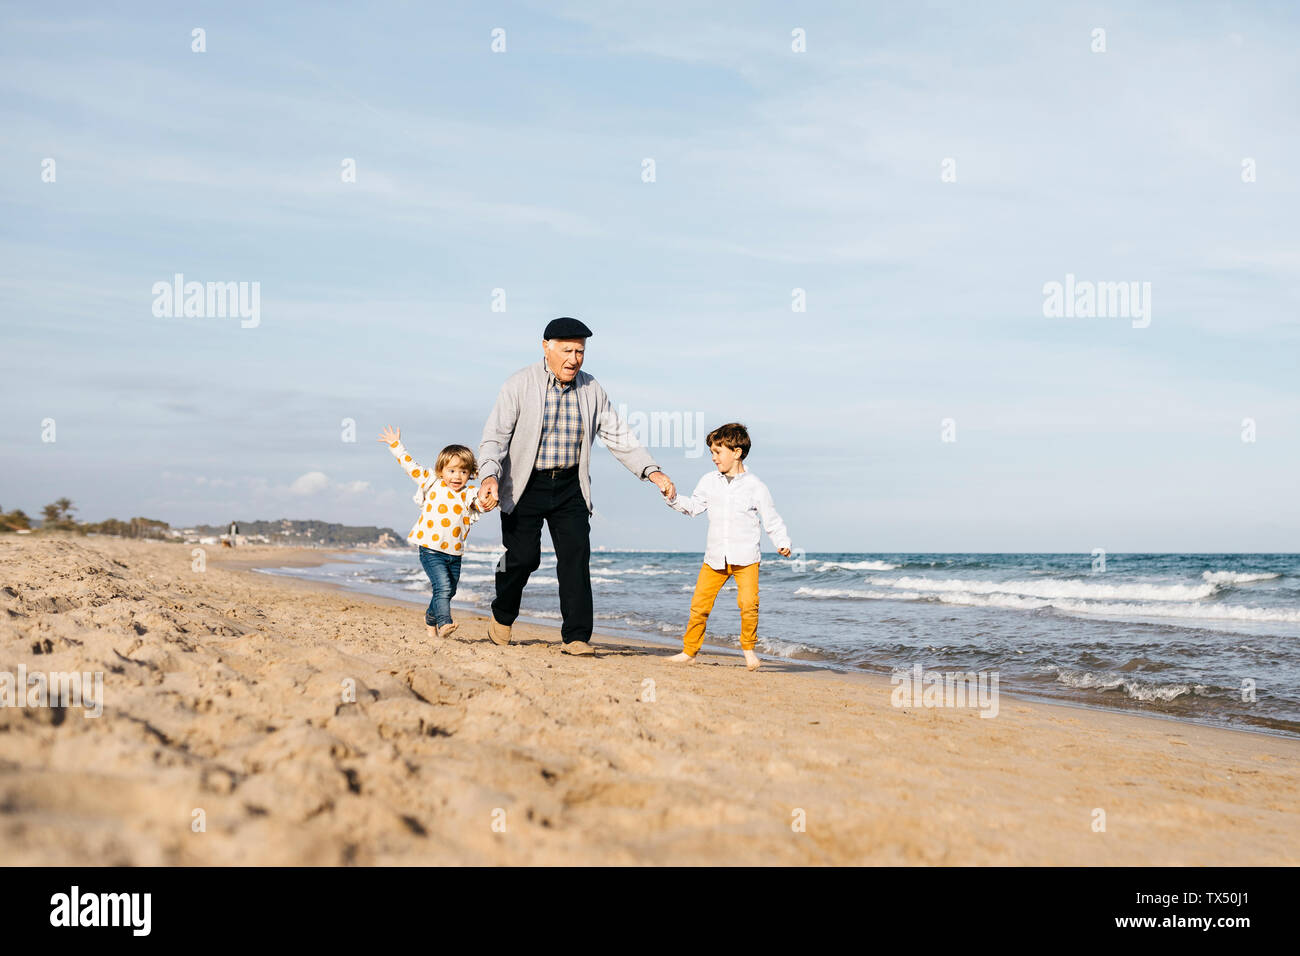 Grandfather having fun with his grandchildren on the beach Stock Photo